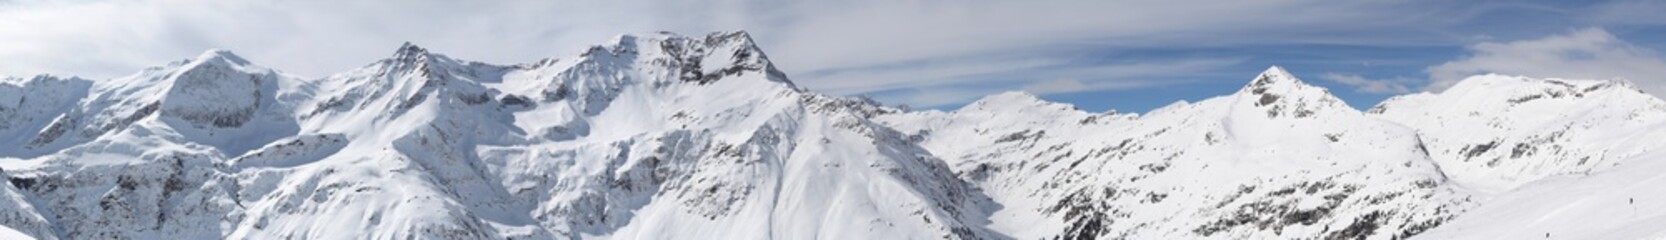 European Alps panorama